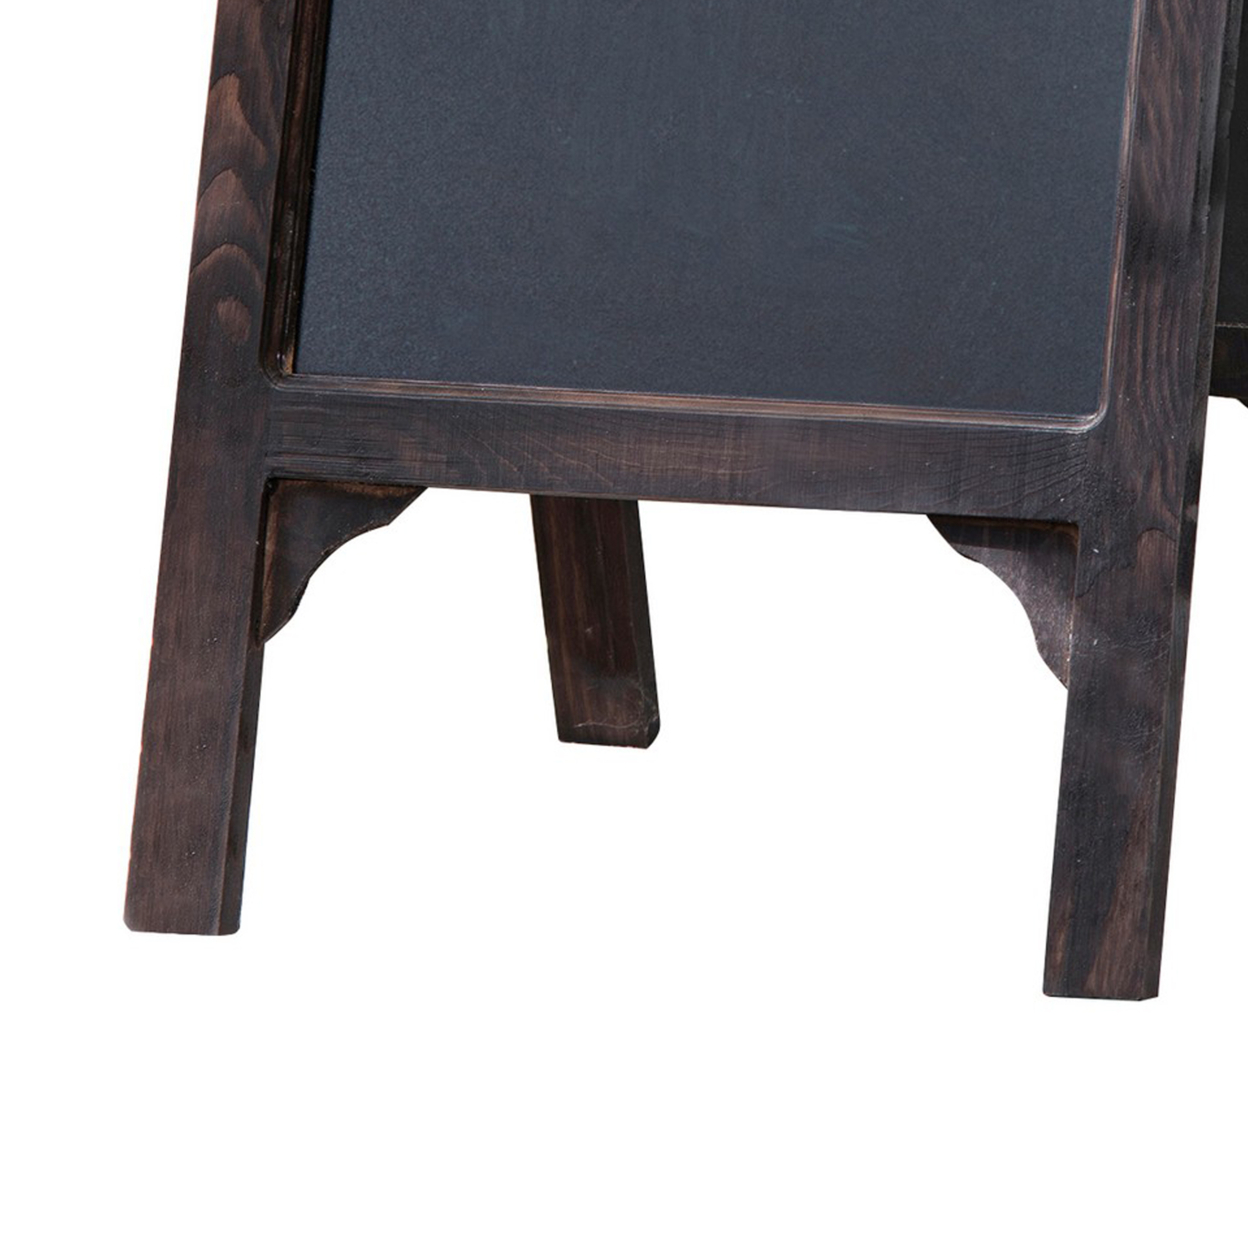 25 Inch Classic Wood Blackboard Stand, Dual Framed, Carved Details, Brown- Saltoro Sherpi